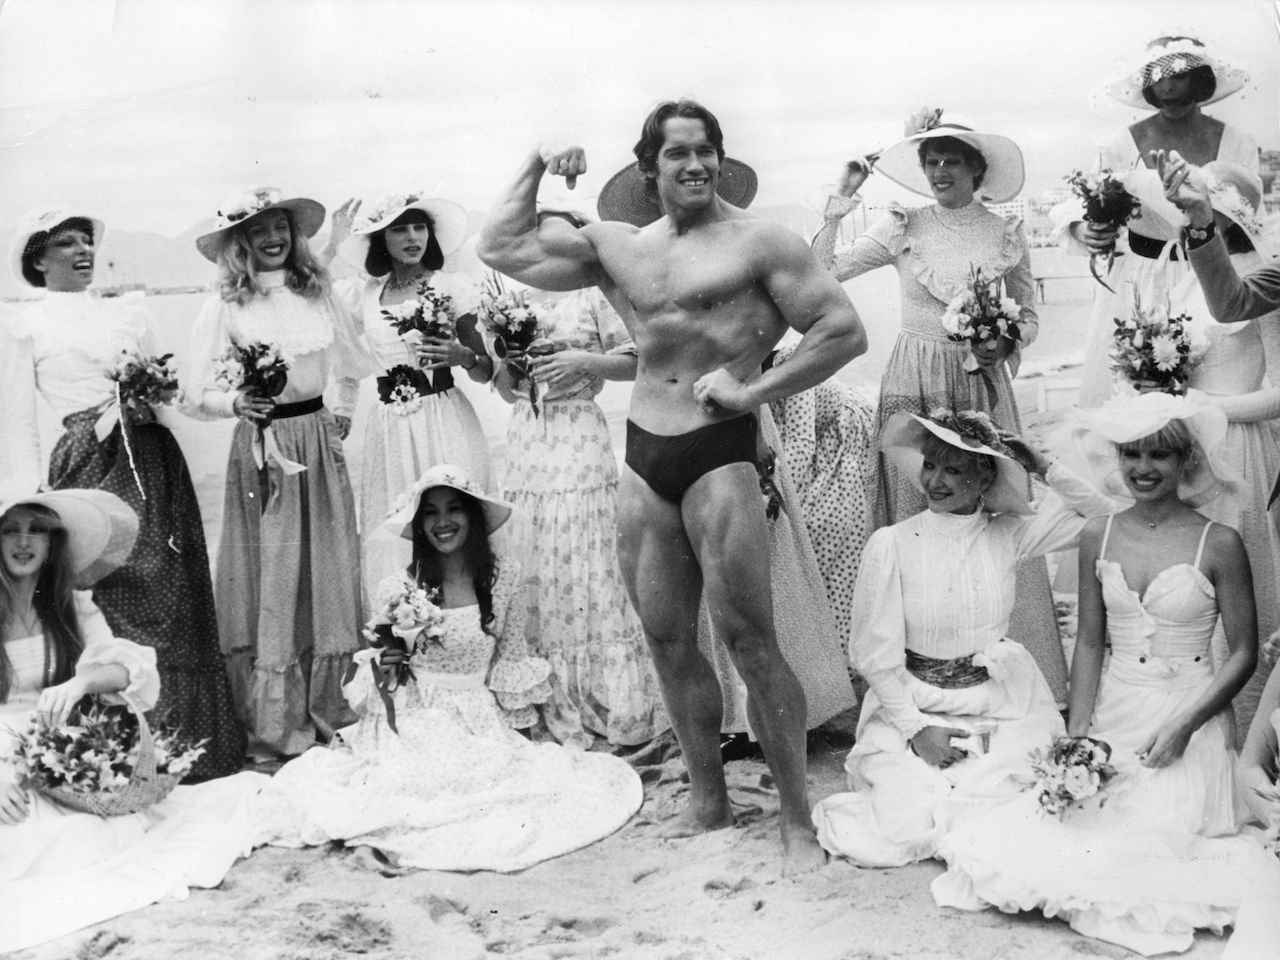 Arnold Schwarzenegger on Cannes beach during the Film Festival